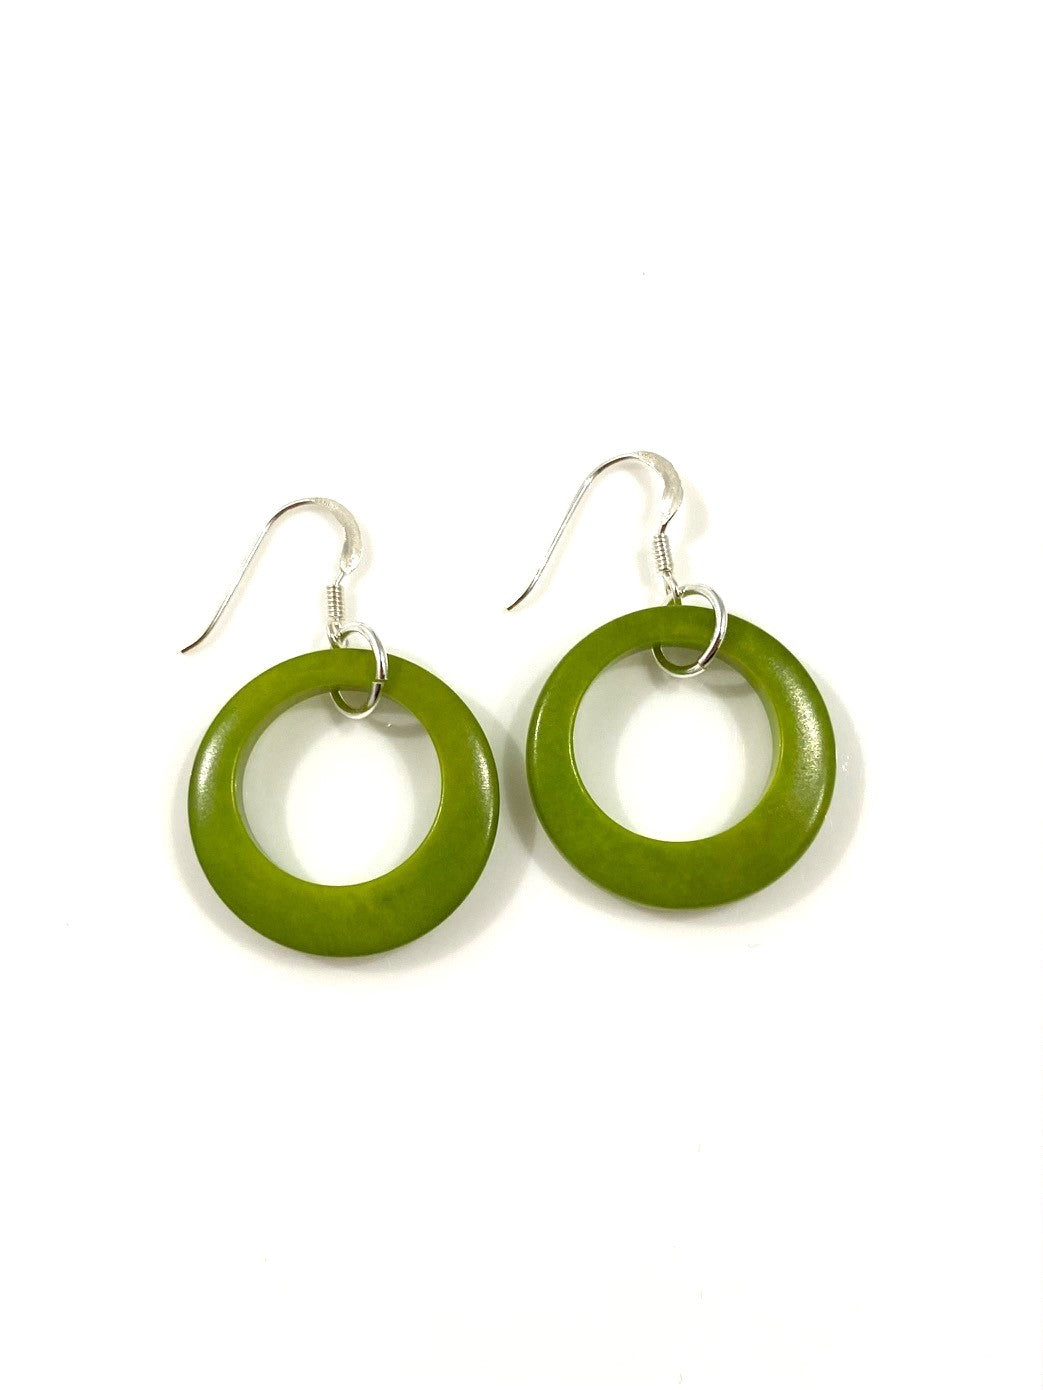 Aros Earrings - Green Pistachio